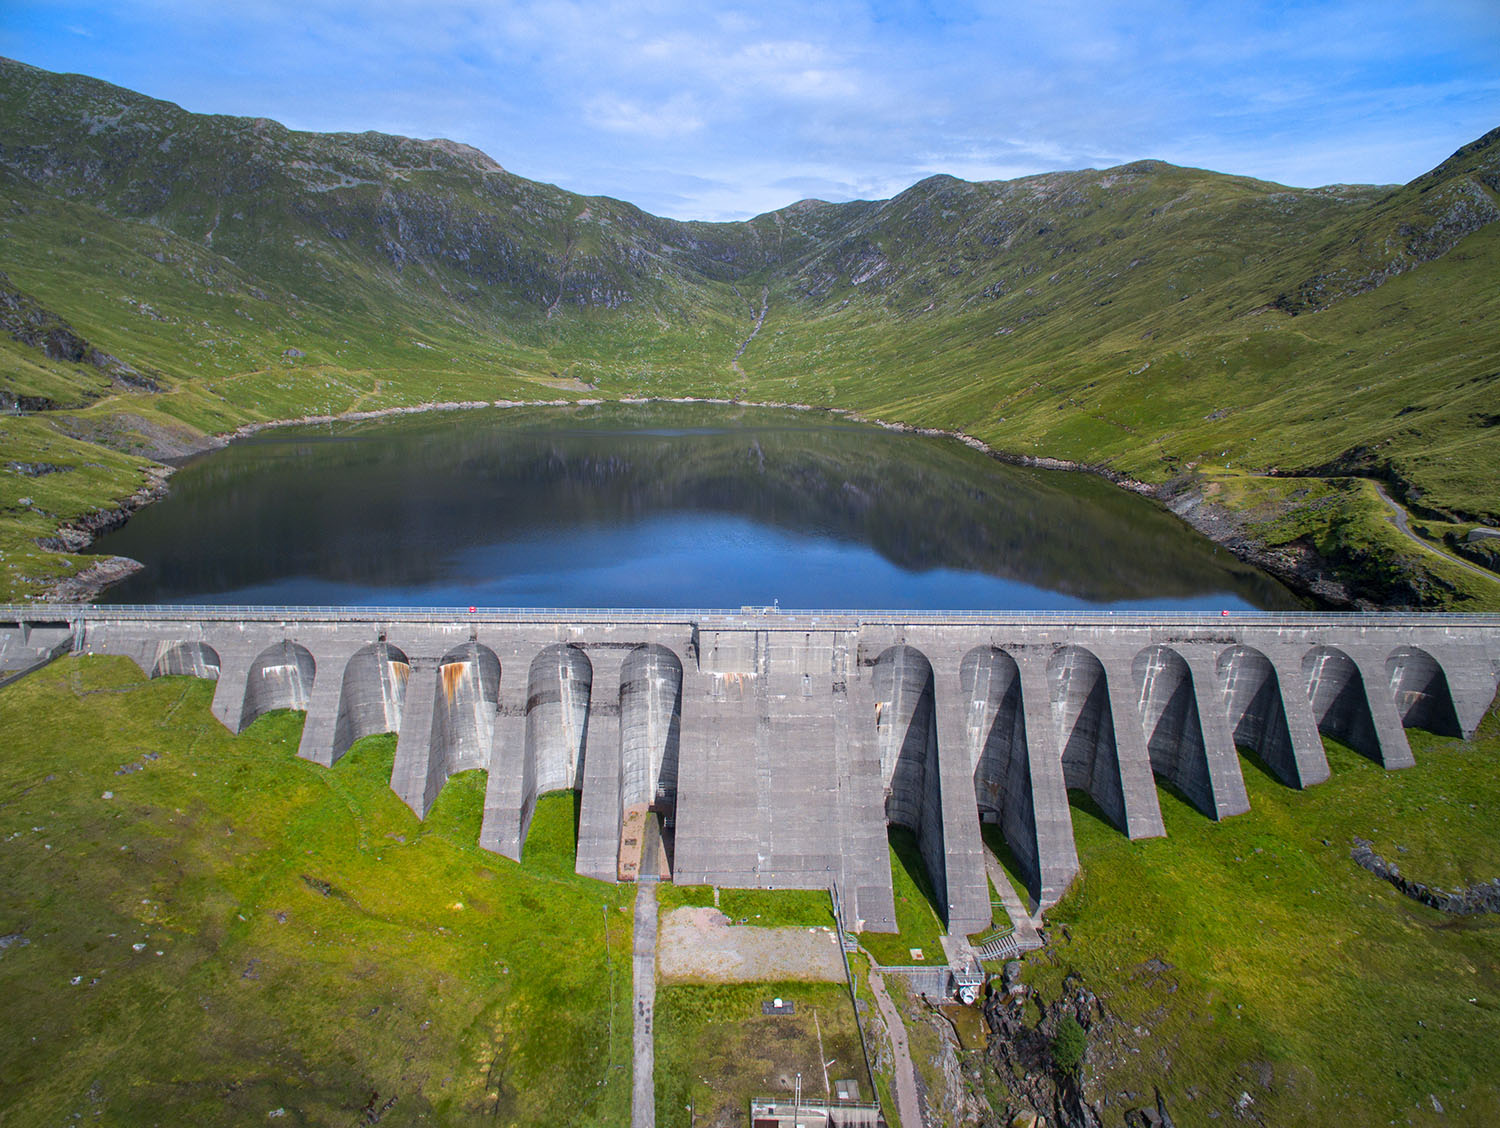  The ScottishPower Cruachan Hydroelectric Power Station on Loch Awe, near Dalmally, Scotland. 